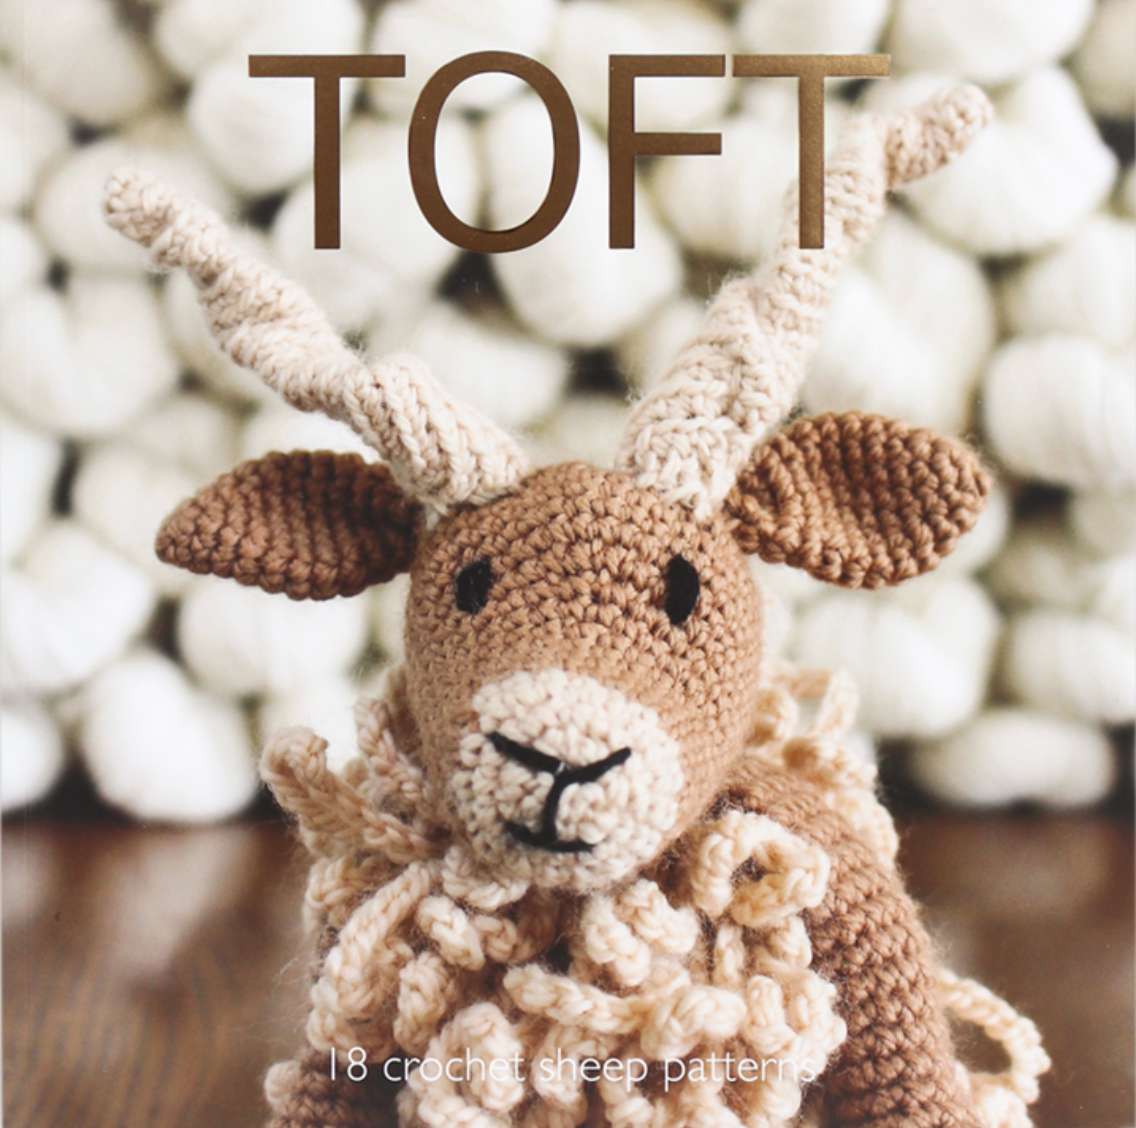 TOFT - Sheep Magazine - YourNextKnit